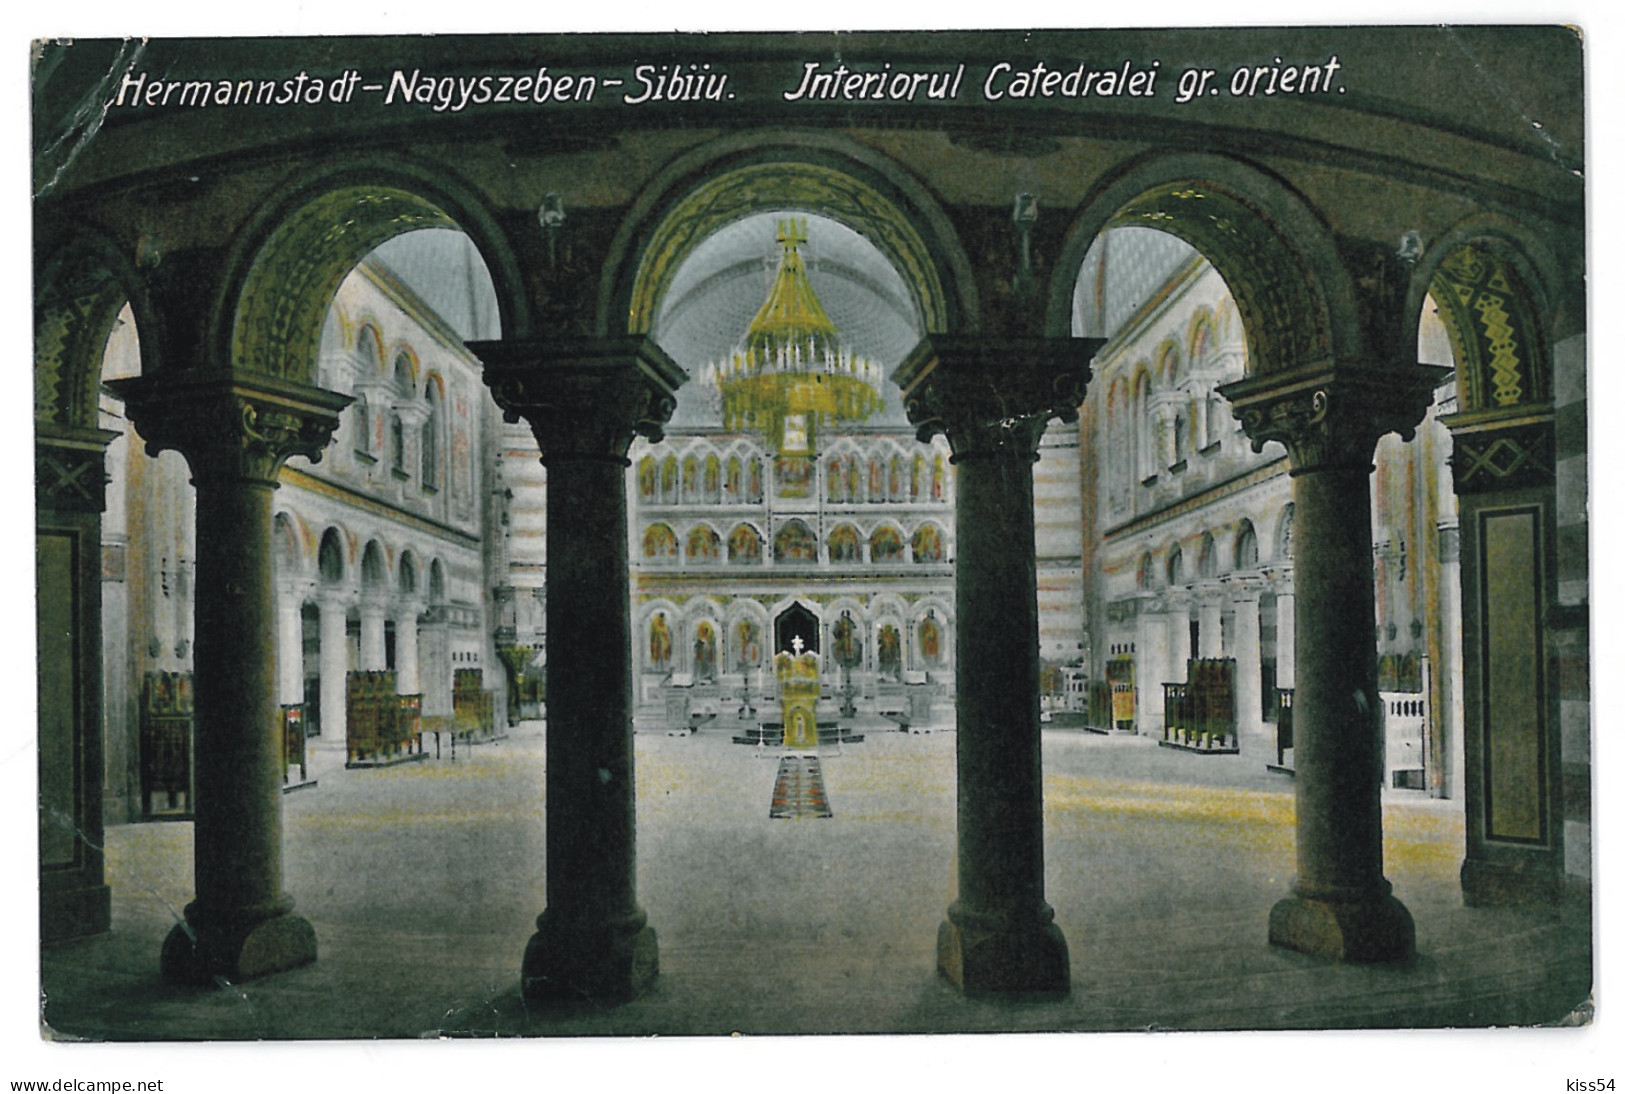 RO 45 - 11031 SIBIU, Cathedral, Romania - Old Postcard - Used - 1916 - Romania